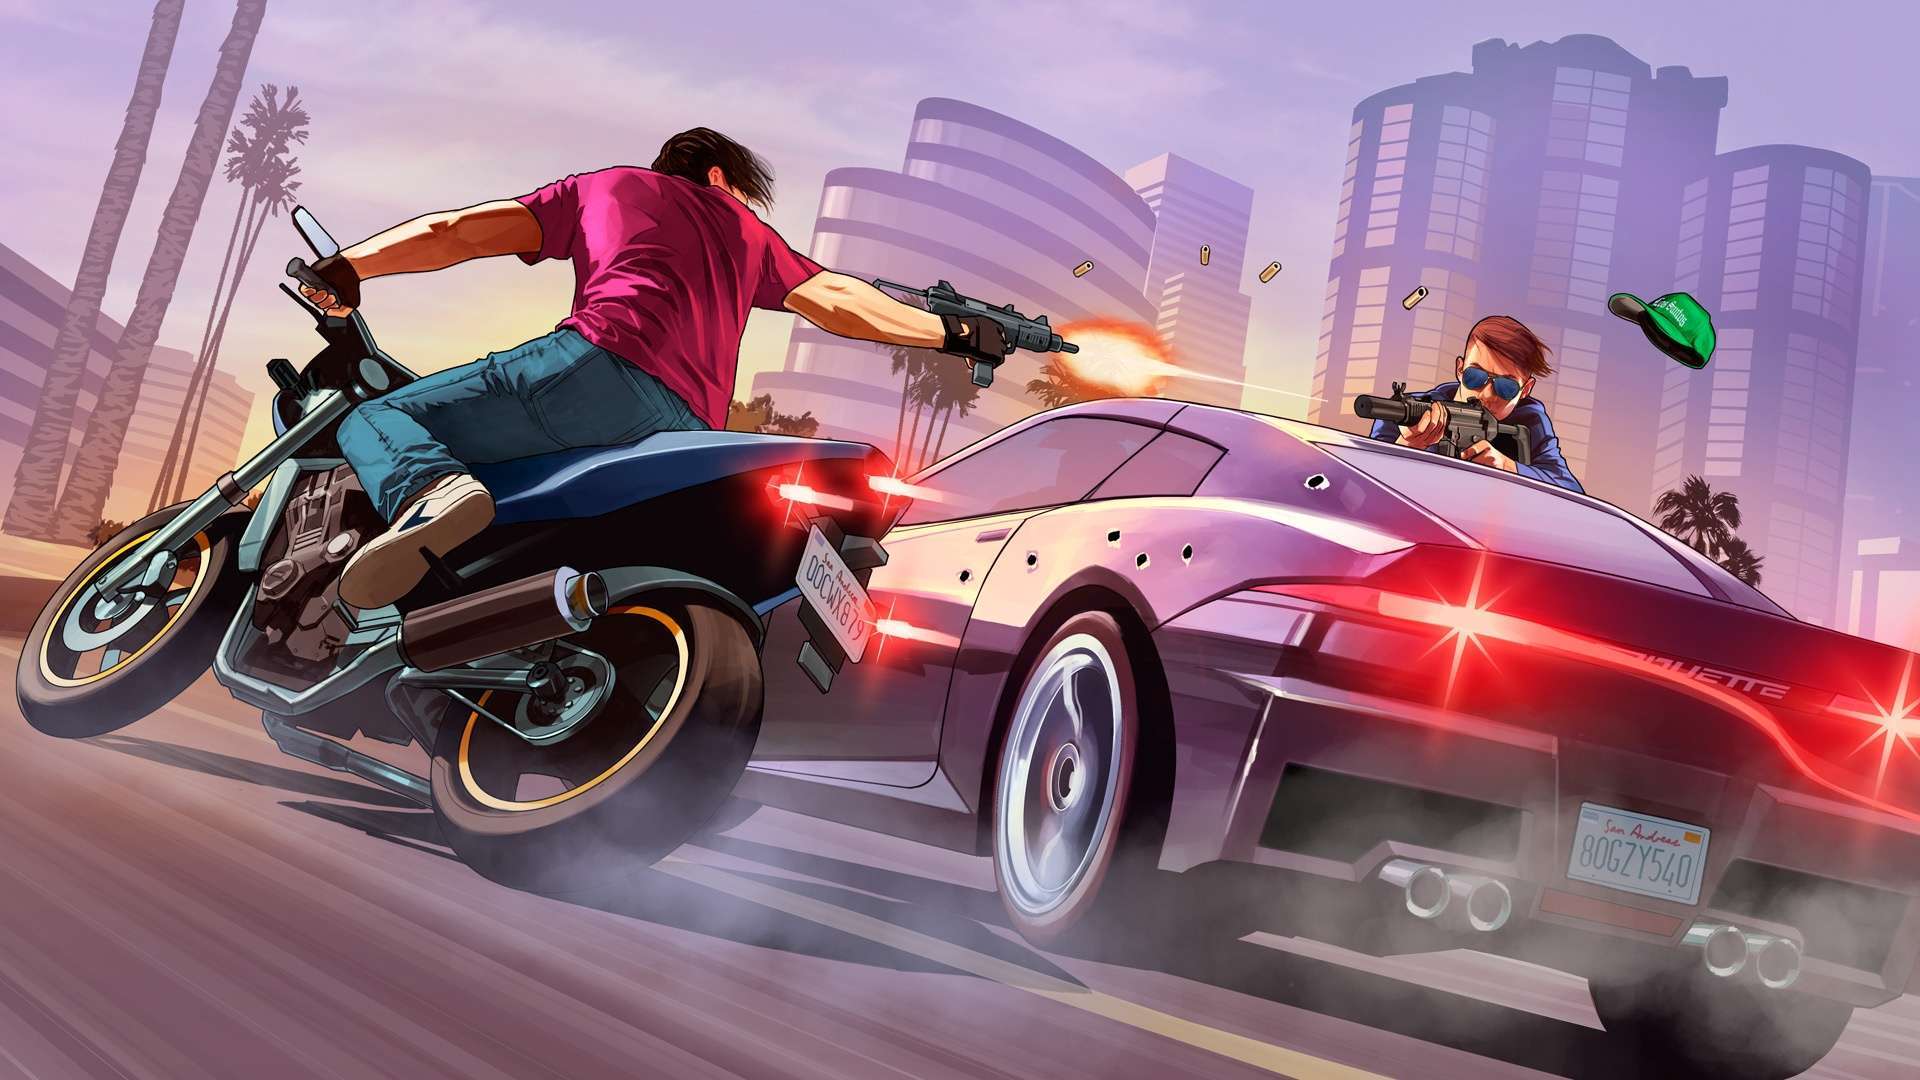 Grand Theft Auto V GTA 5 Video Game HD Wallpaper Download